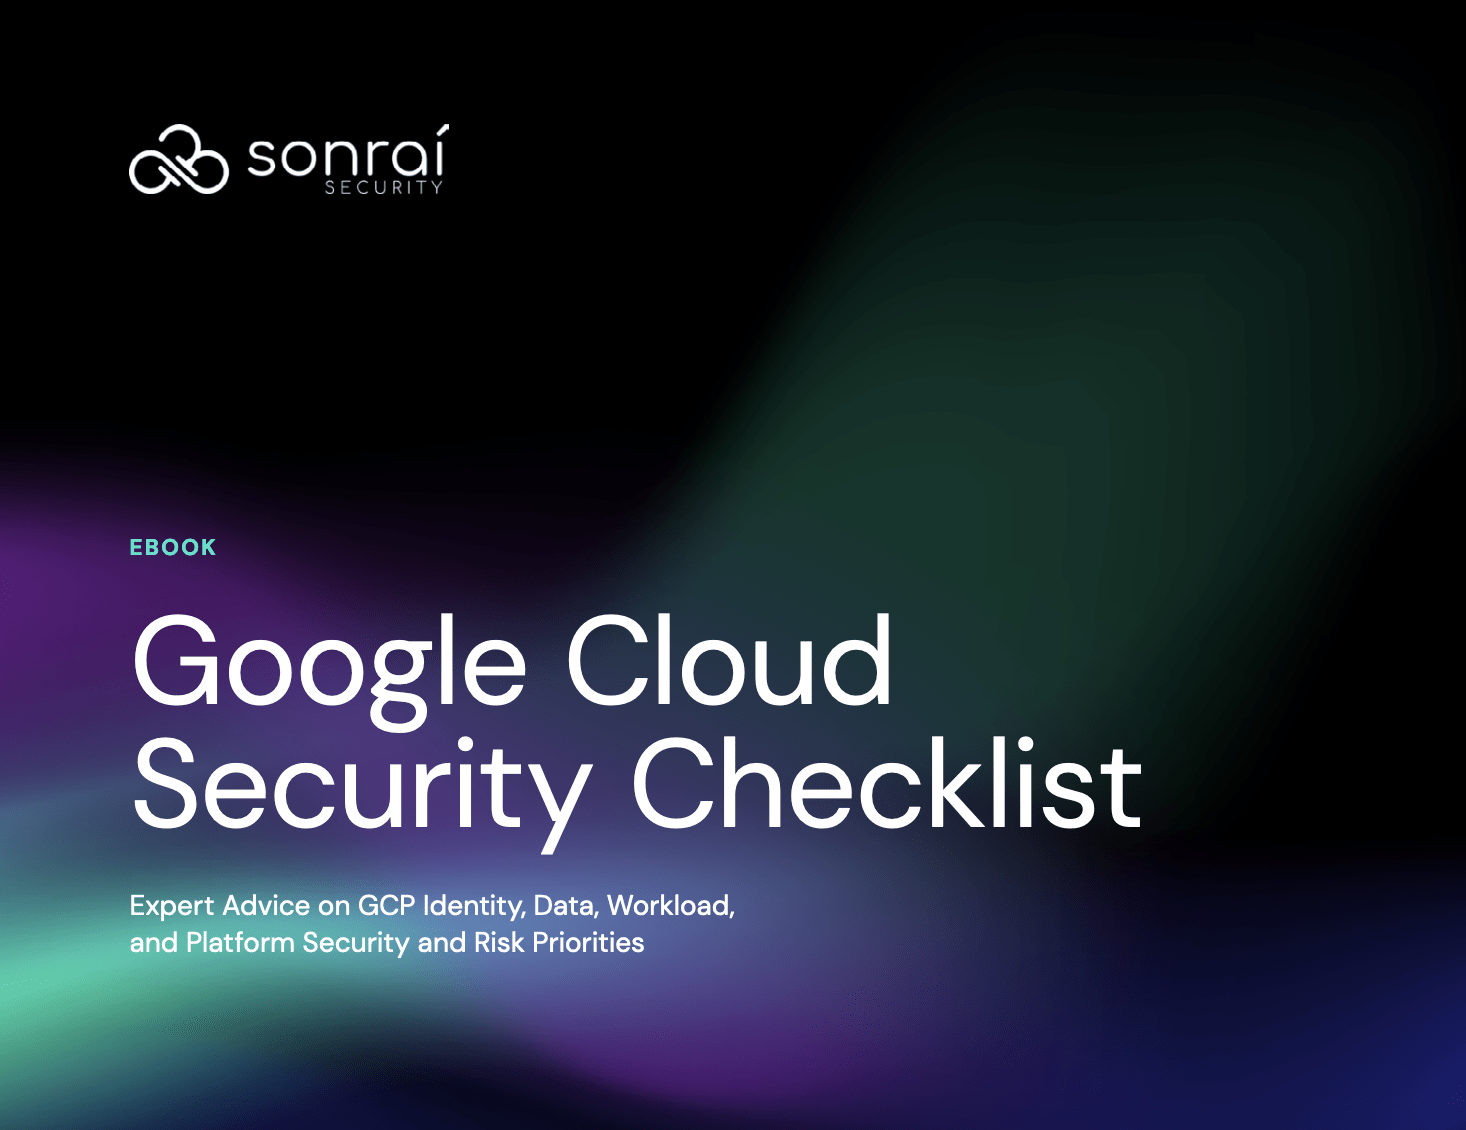 google cloud - Google Cloud Security Checklist